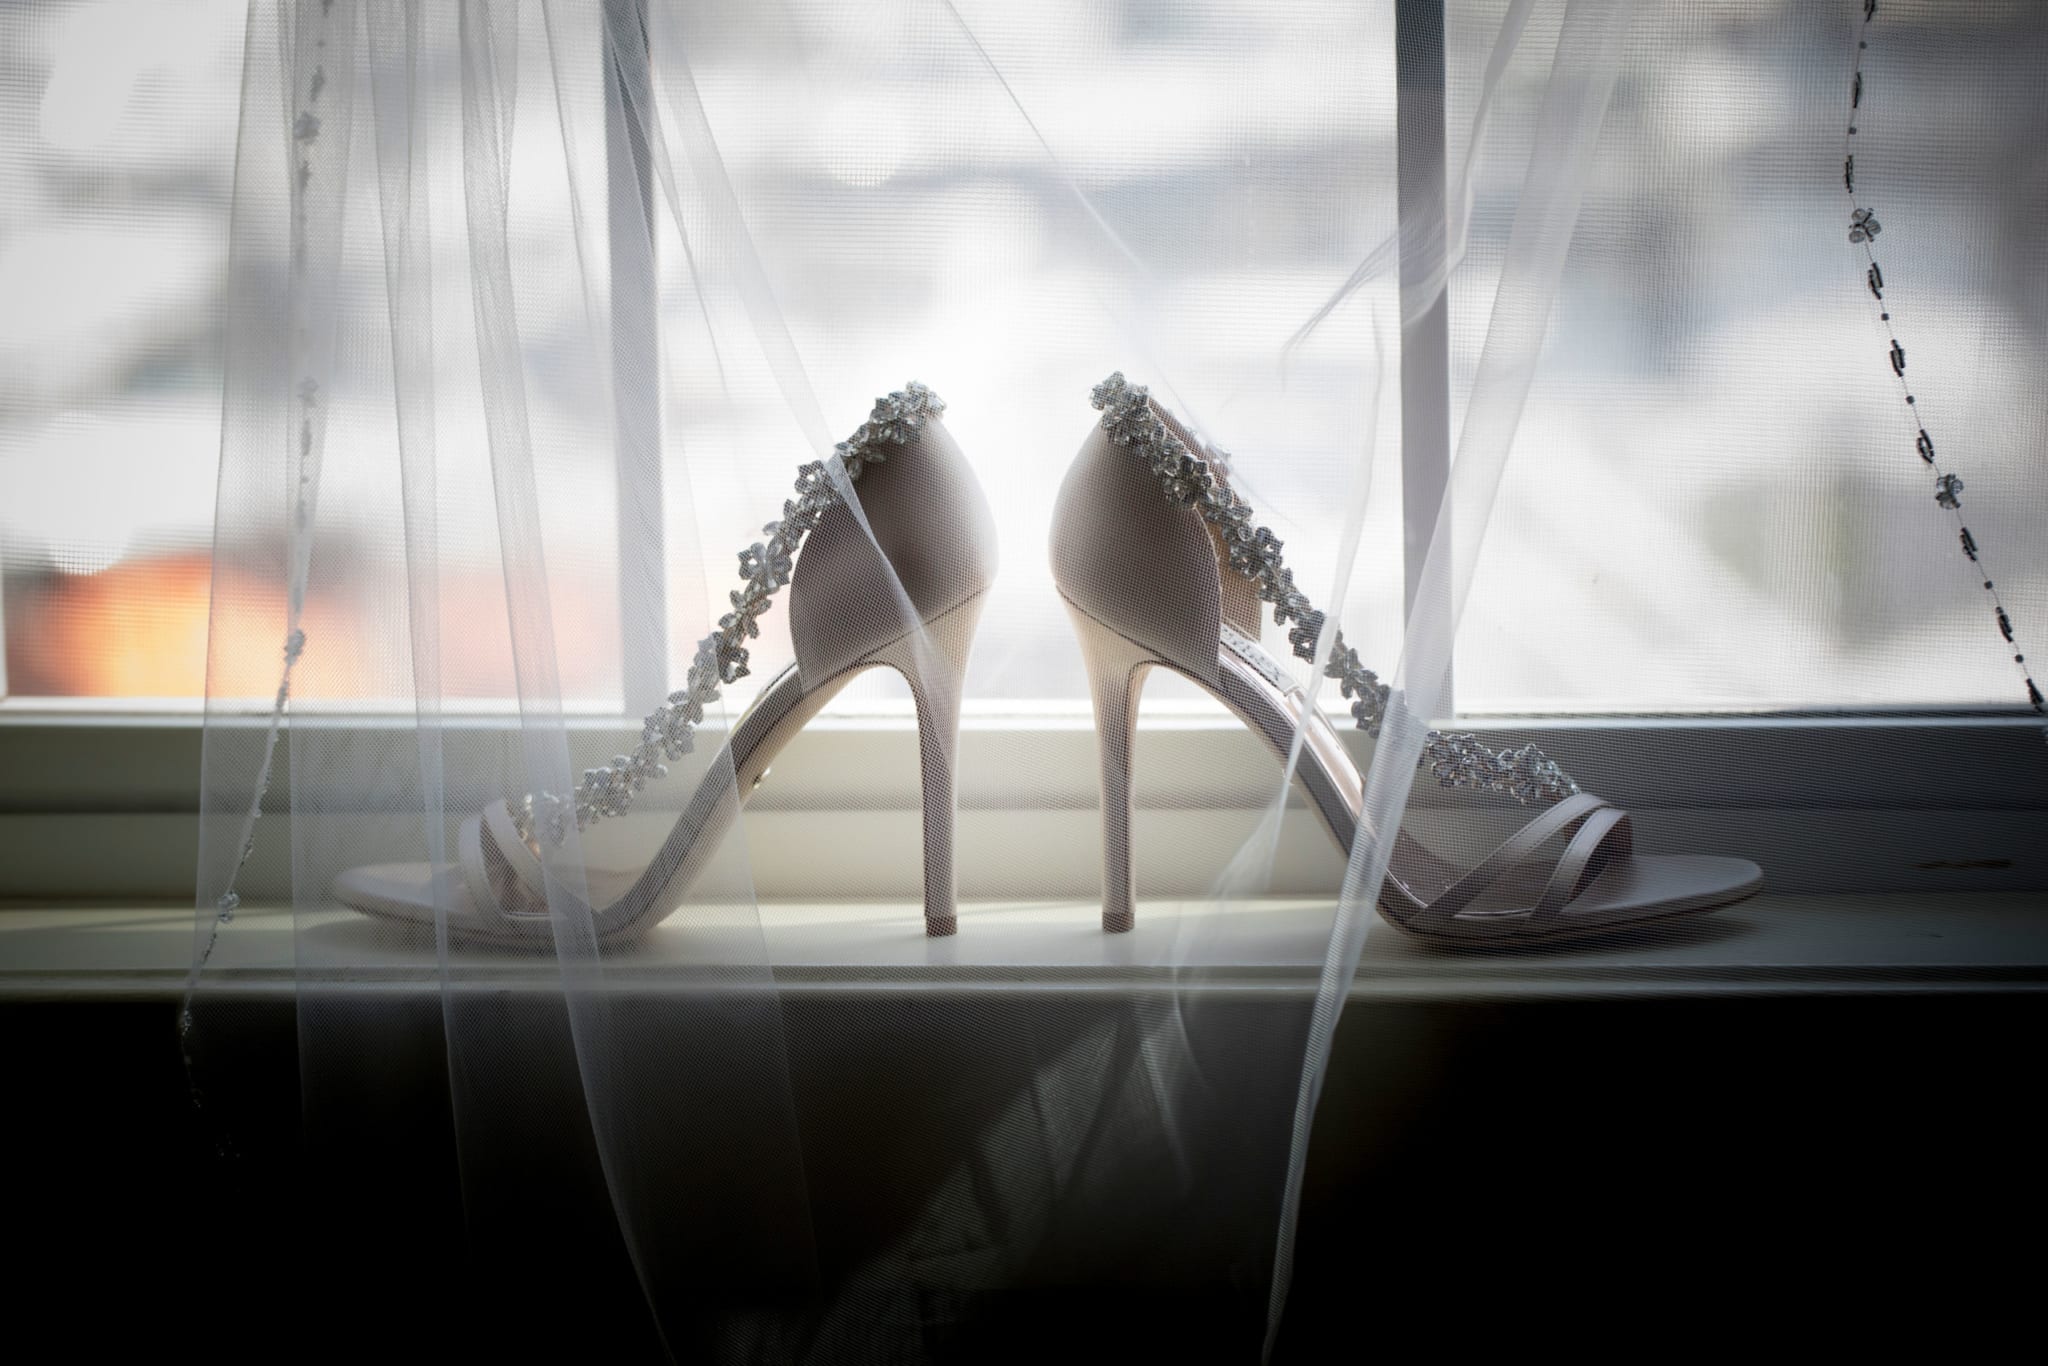 Jessica's wedding shoes on a windowsill.